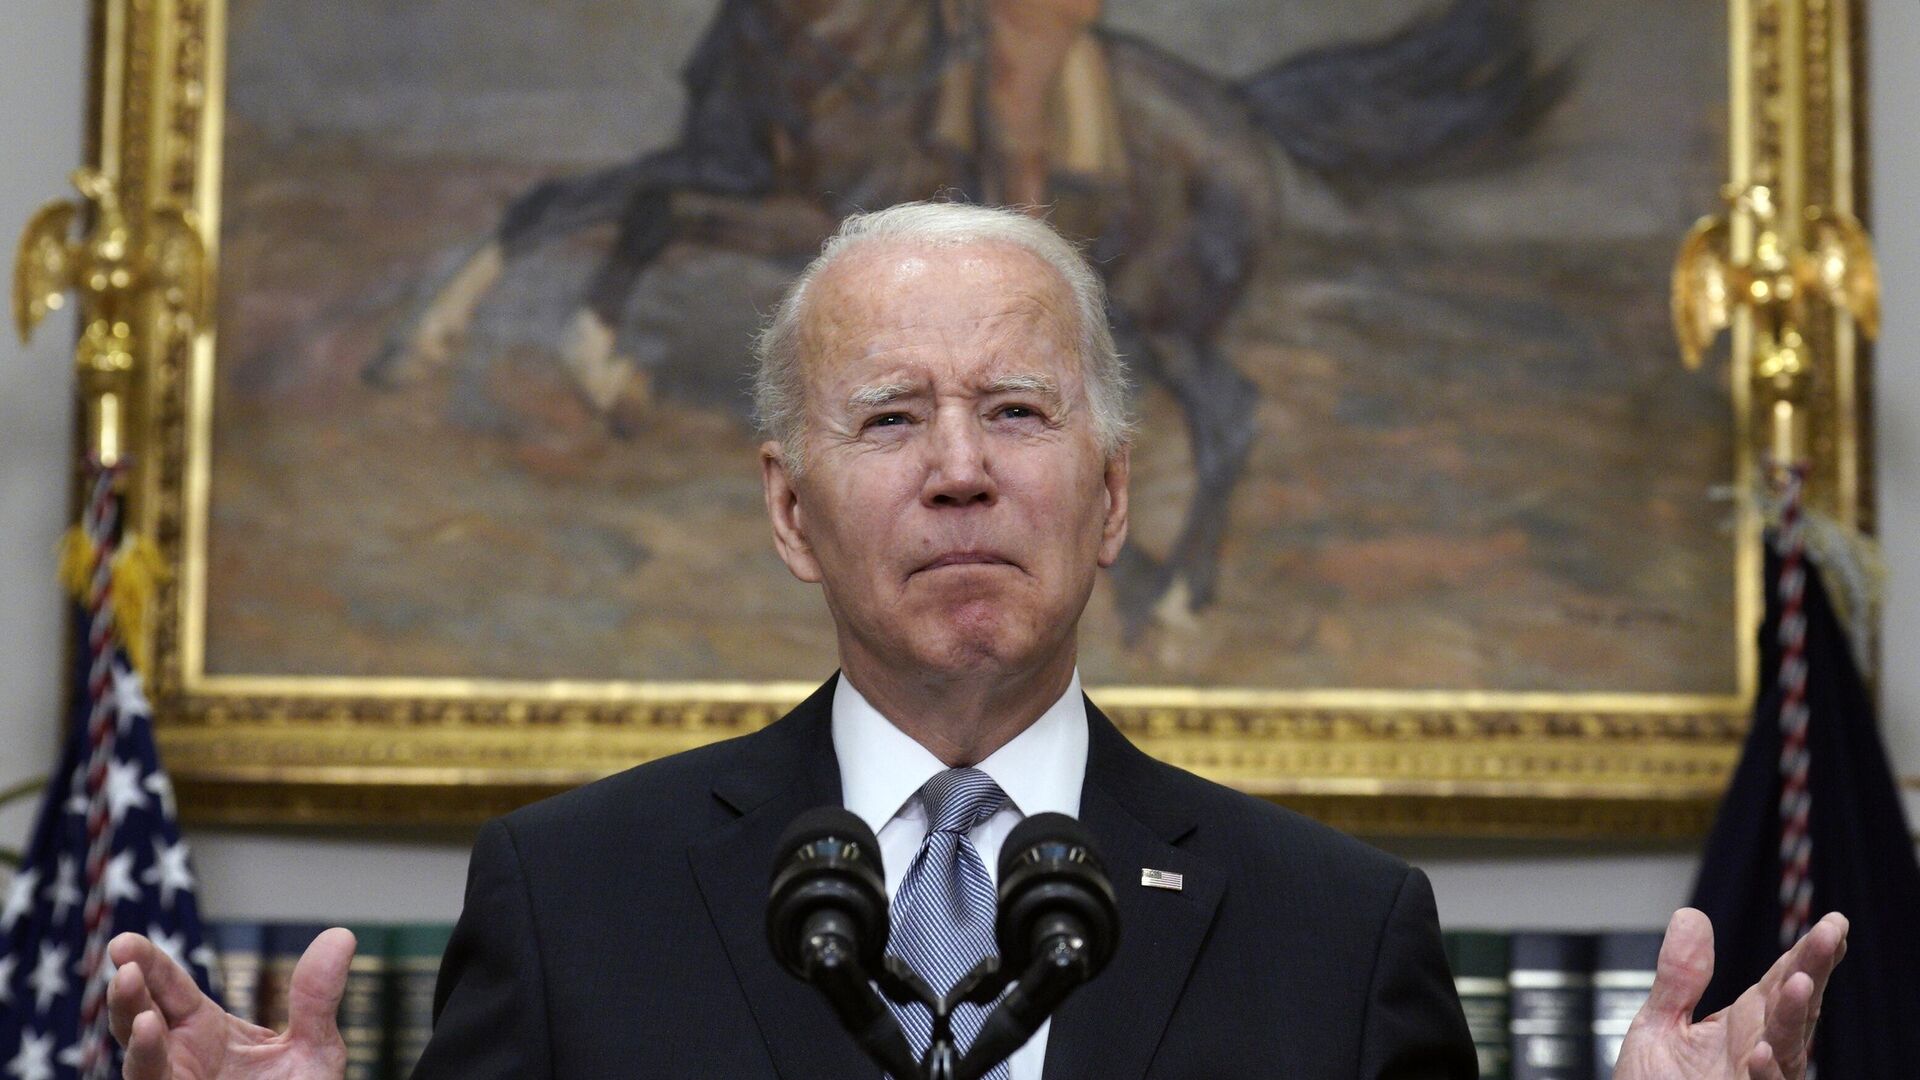 US President Joe Biden delivers a statement at the White House, March 21, 2022 - Sputnik International, 1920, 01.08.2022